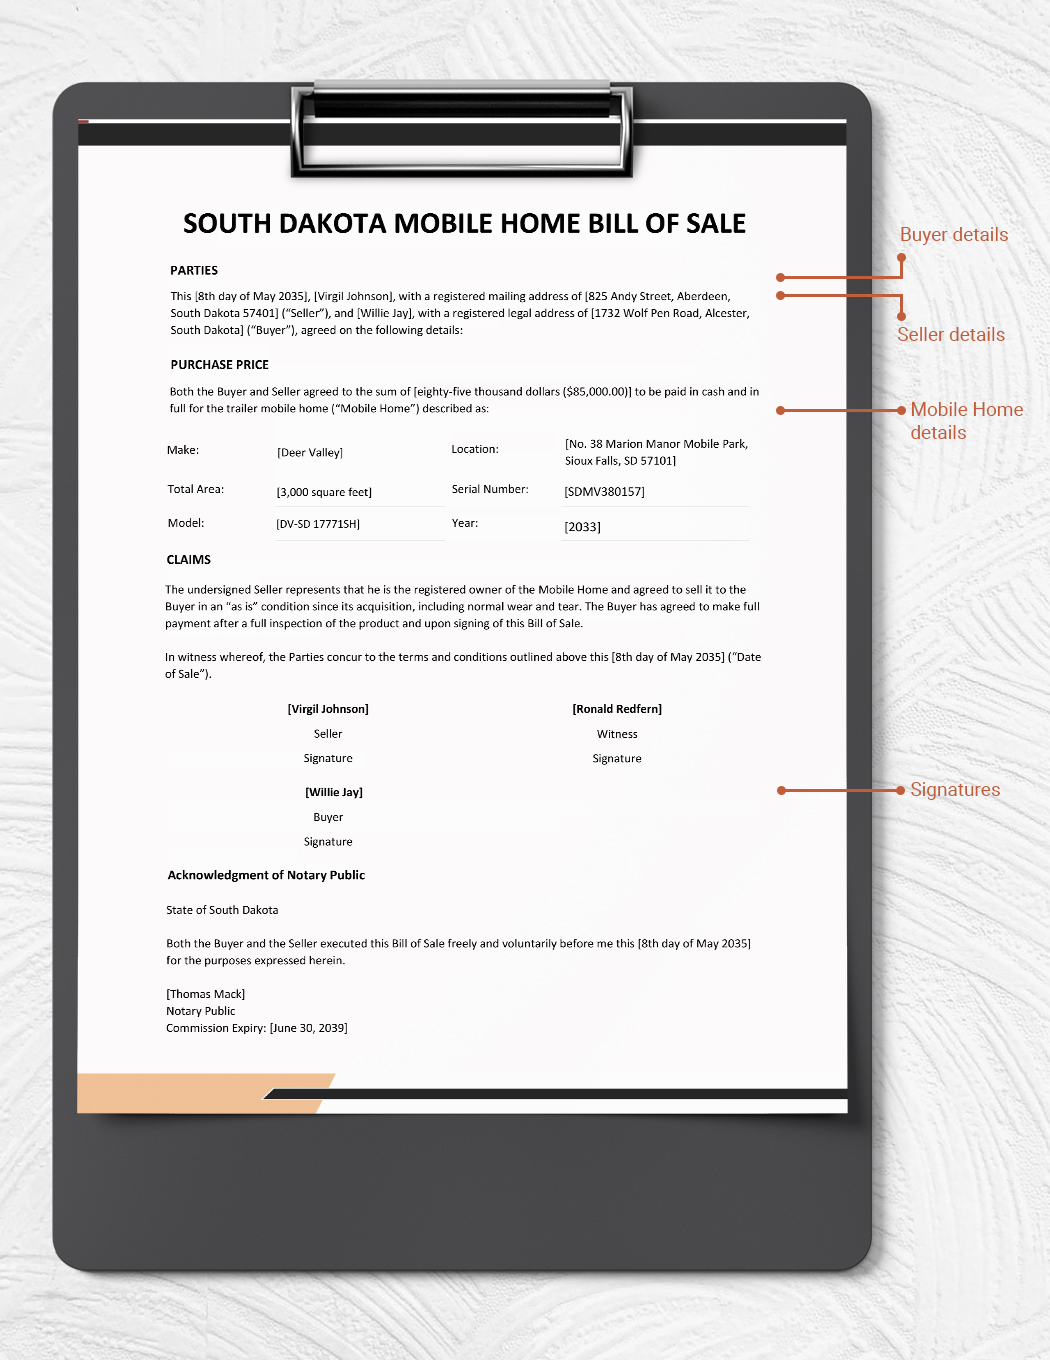 South Dakota Mobile Home Bill of Sale Template